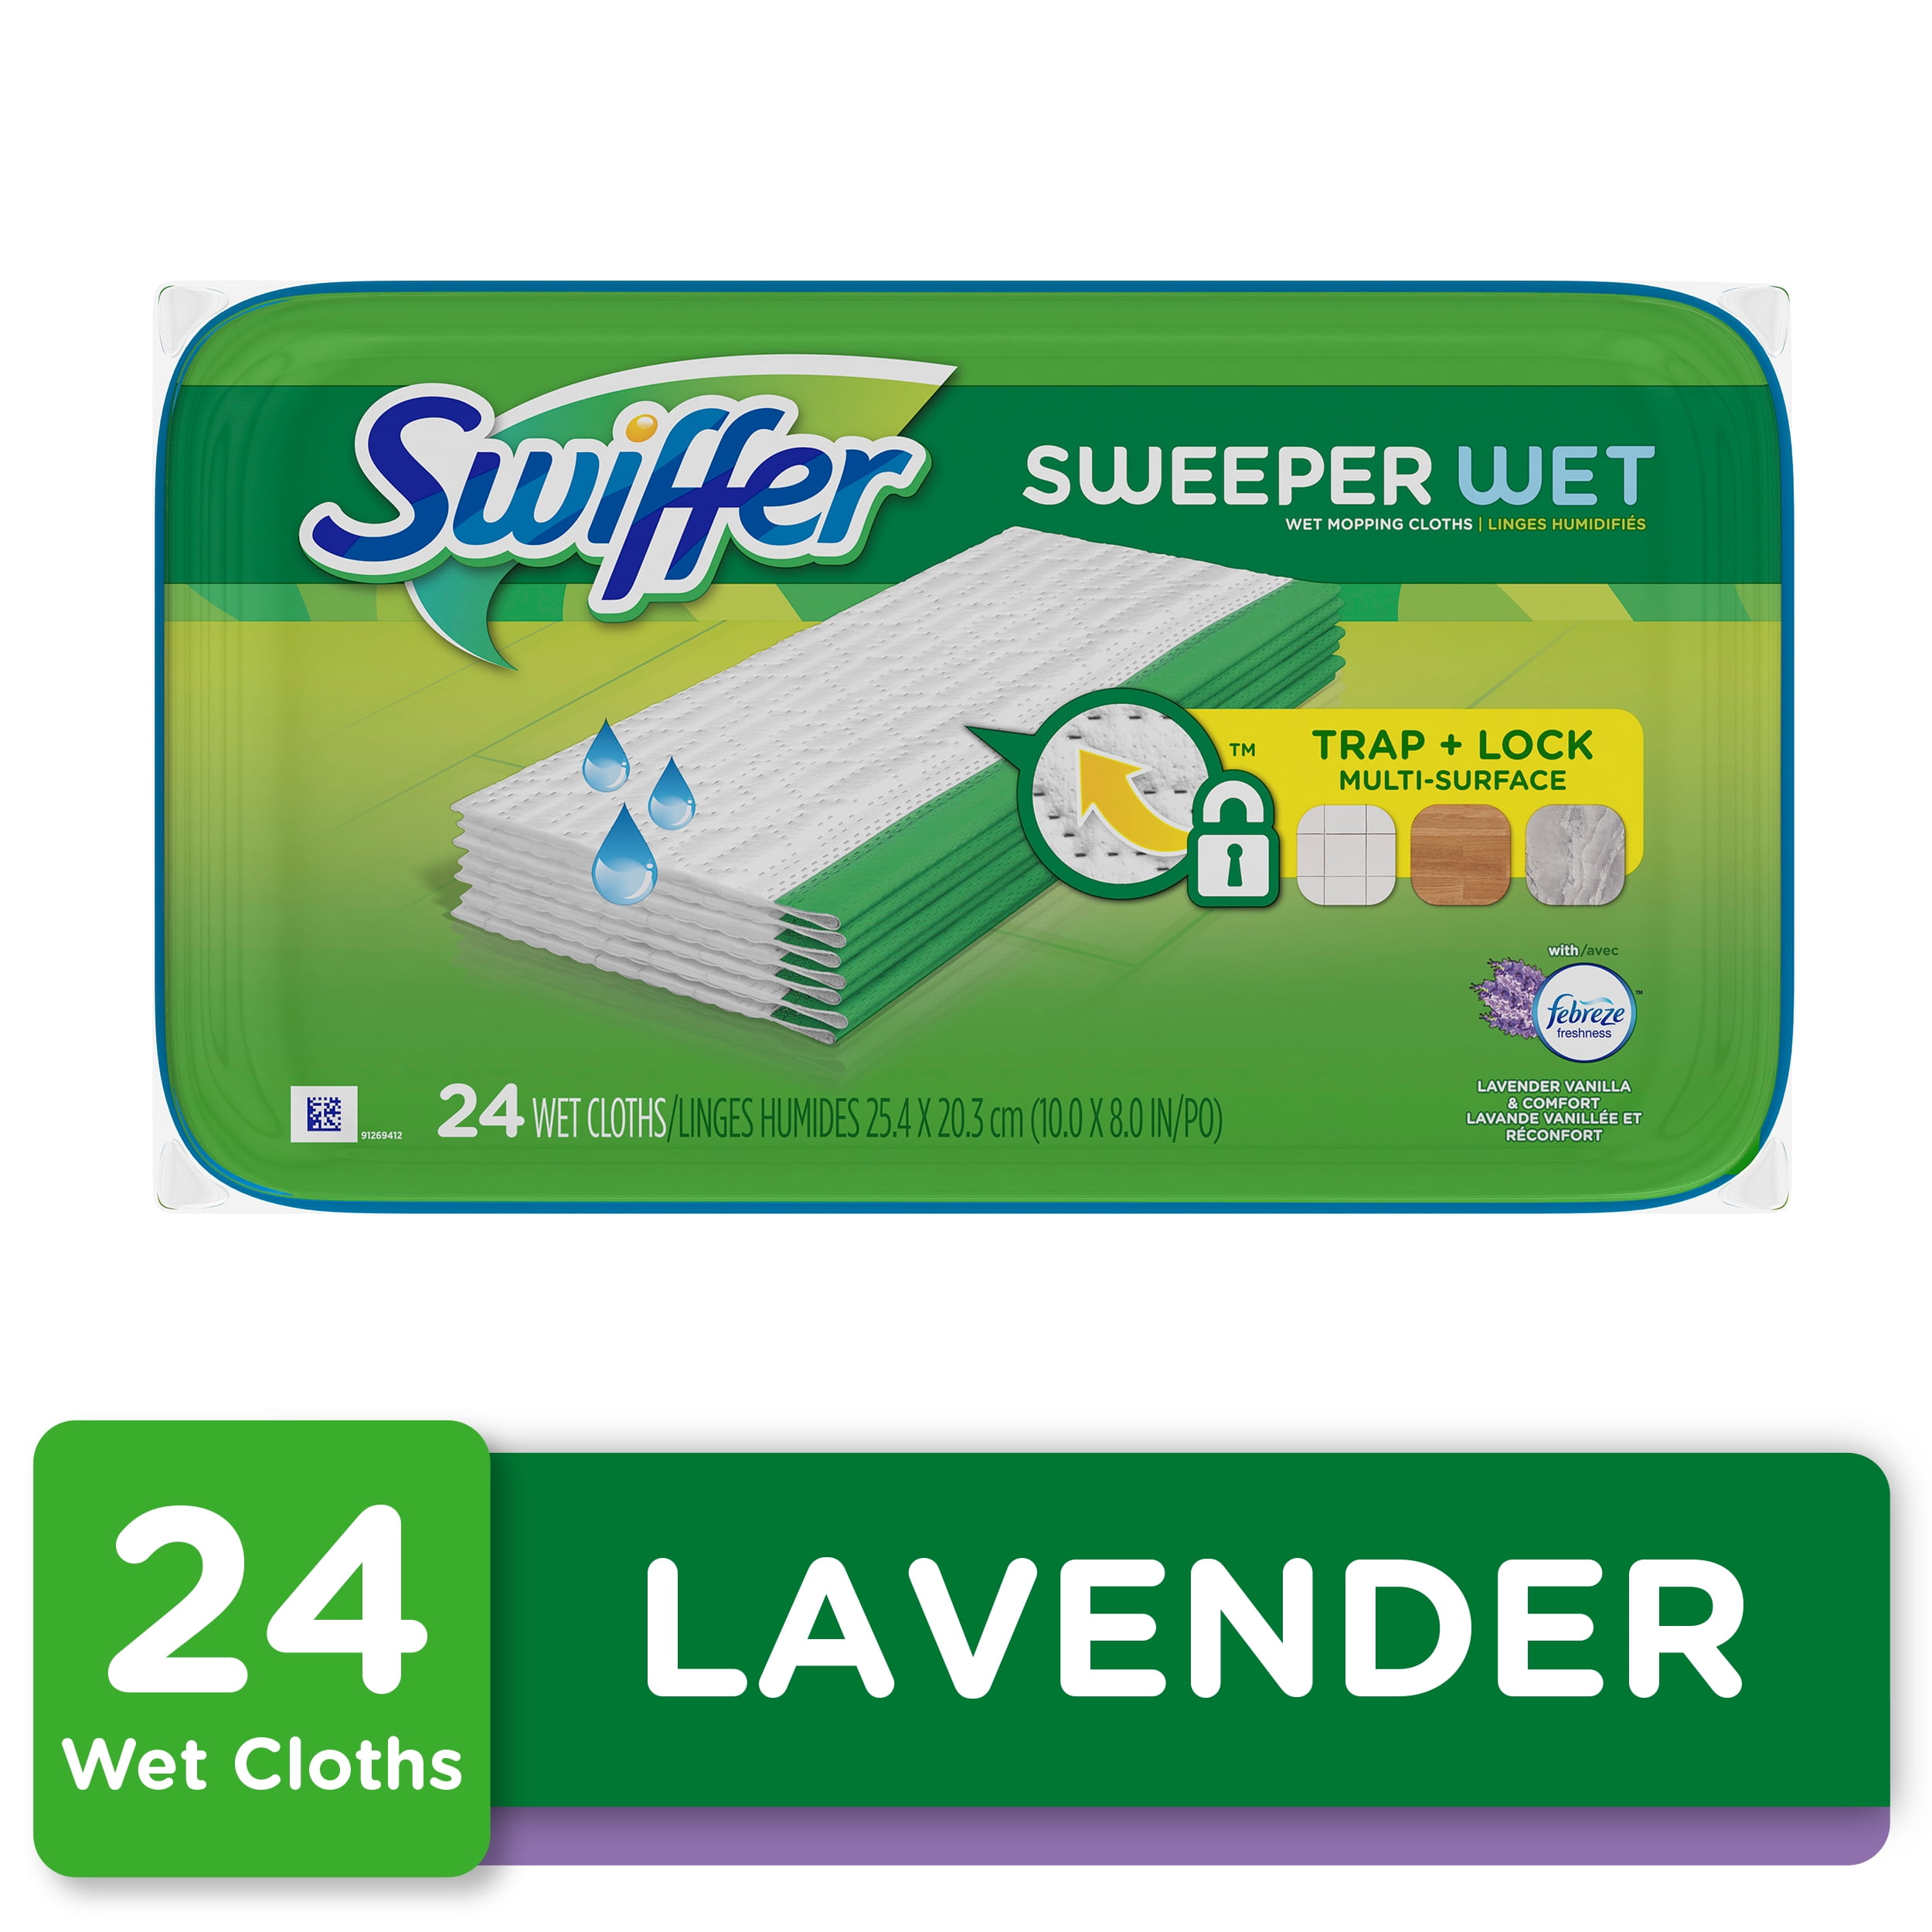 Swiffer Sweeper Wet Refills Open Window Fresh 32ct x 2 = 64 Mopping Cloths